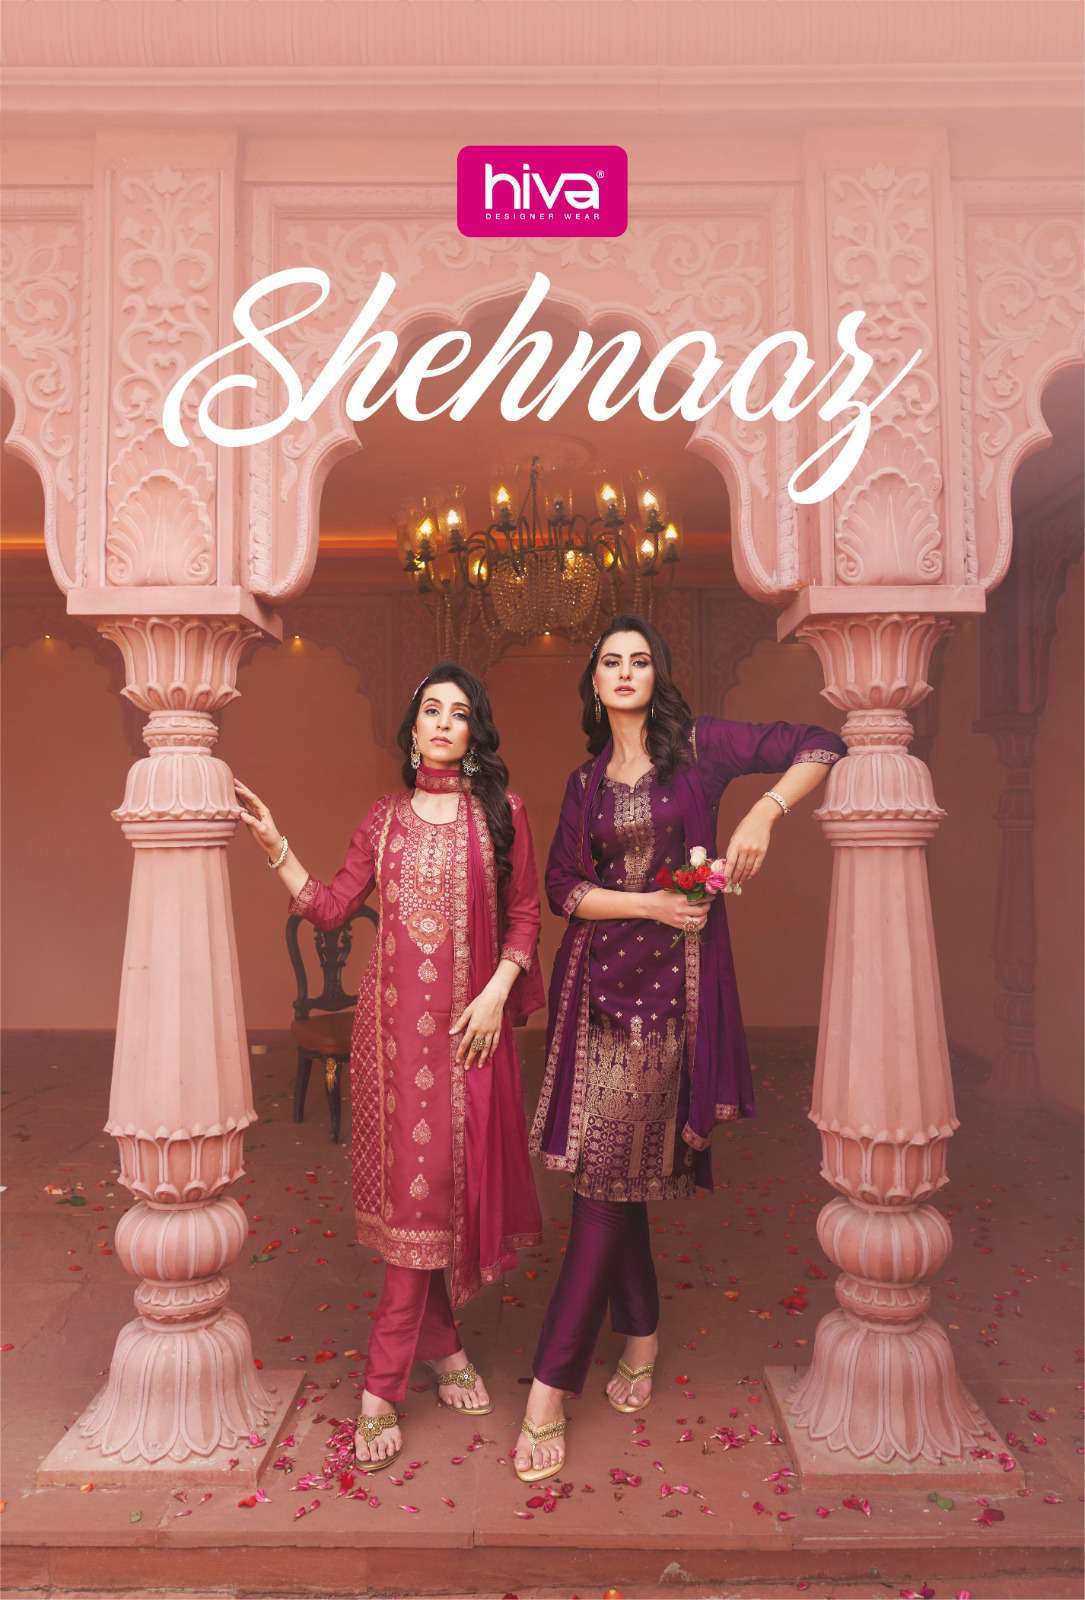 Hiva Shehnaaz Premium Designs Readymade Banarasi Silk Dress Latest Collection